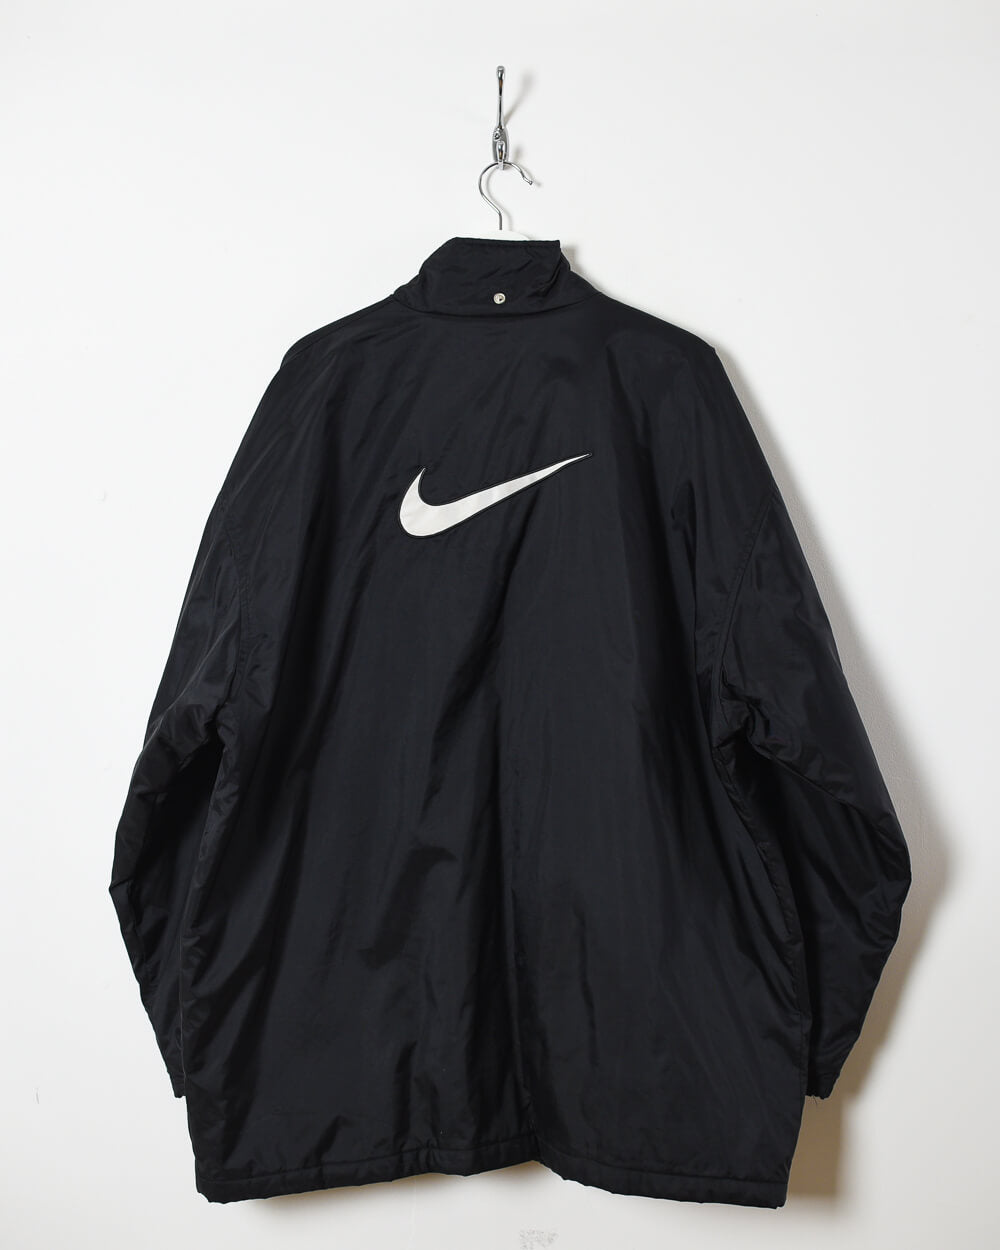 Black Nike Winter Coat - X-Large